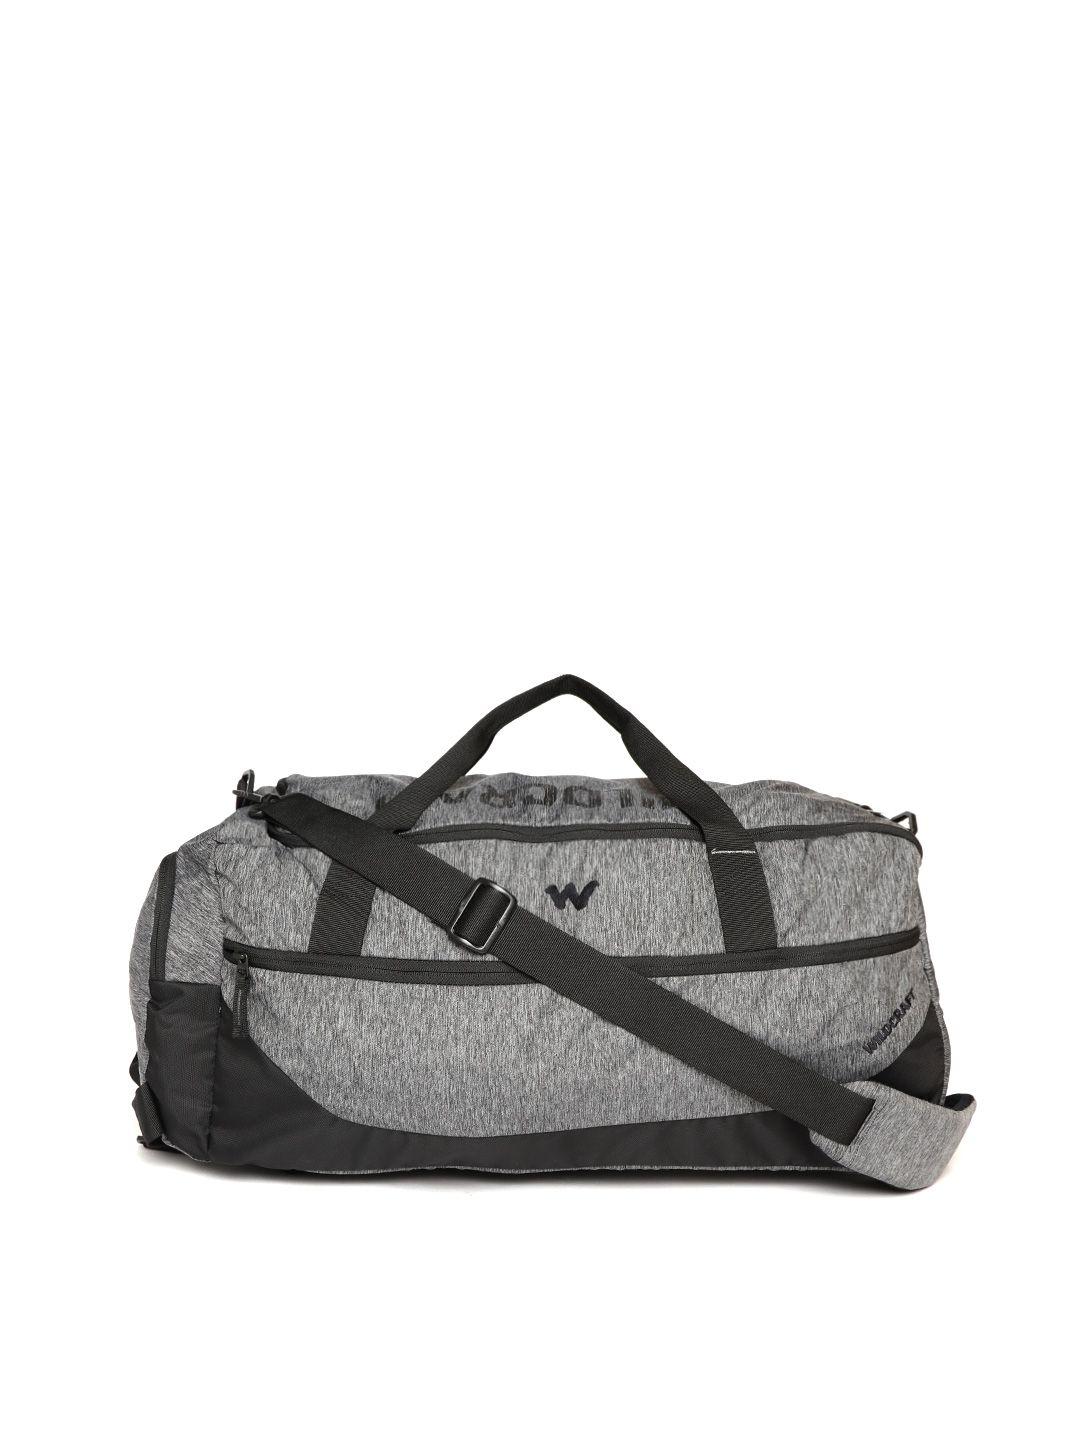 wildcraft unisex black & grey solid duffle bag